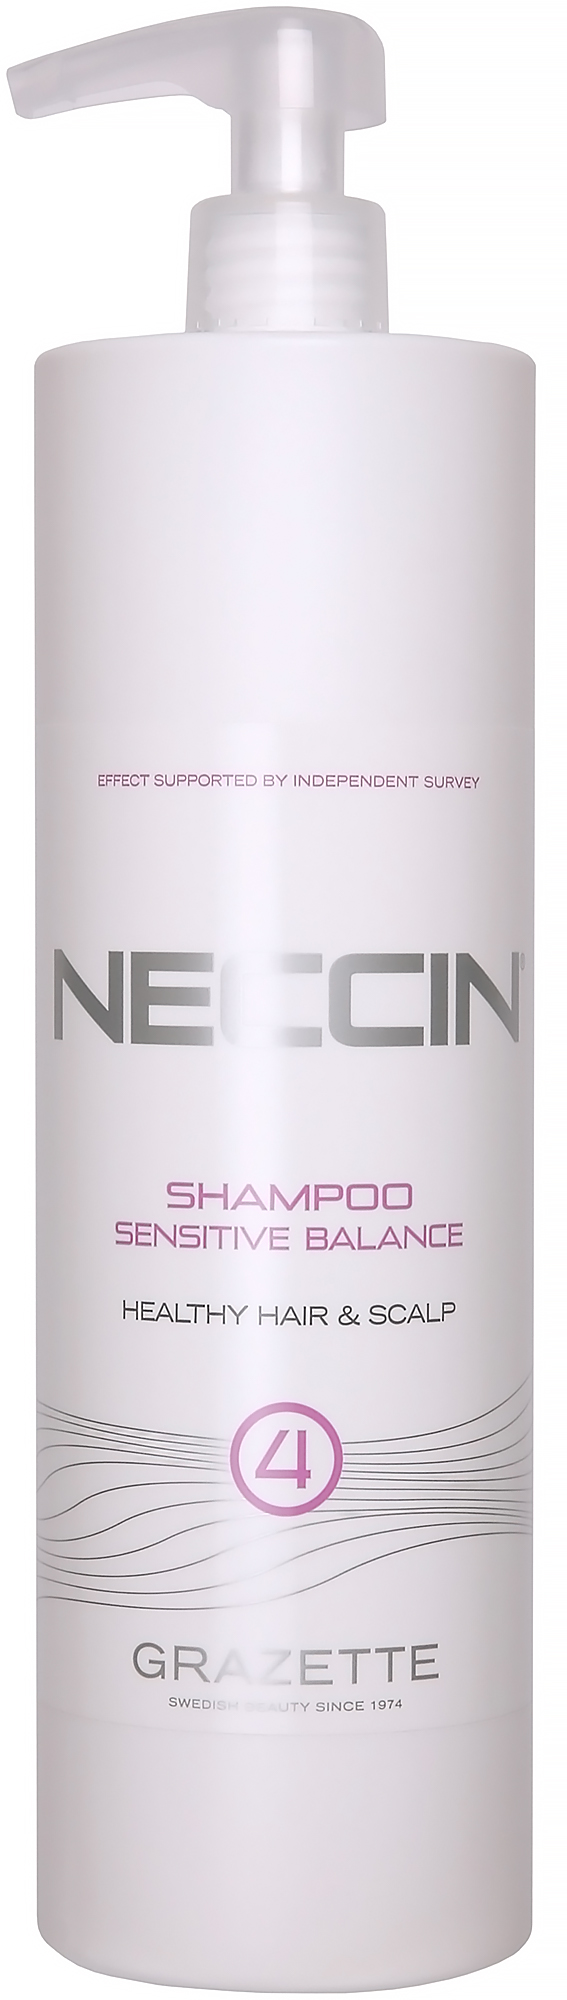 kaldenavn skarp sådan Grazette Neccin No4 Sensitive Balance Shampoo 1000 ml | lyko.com